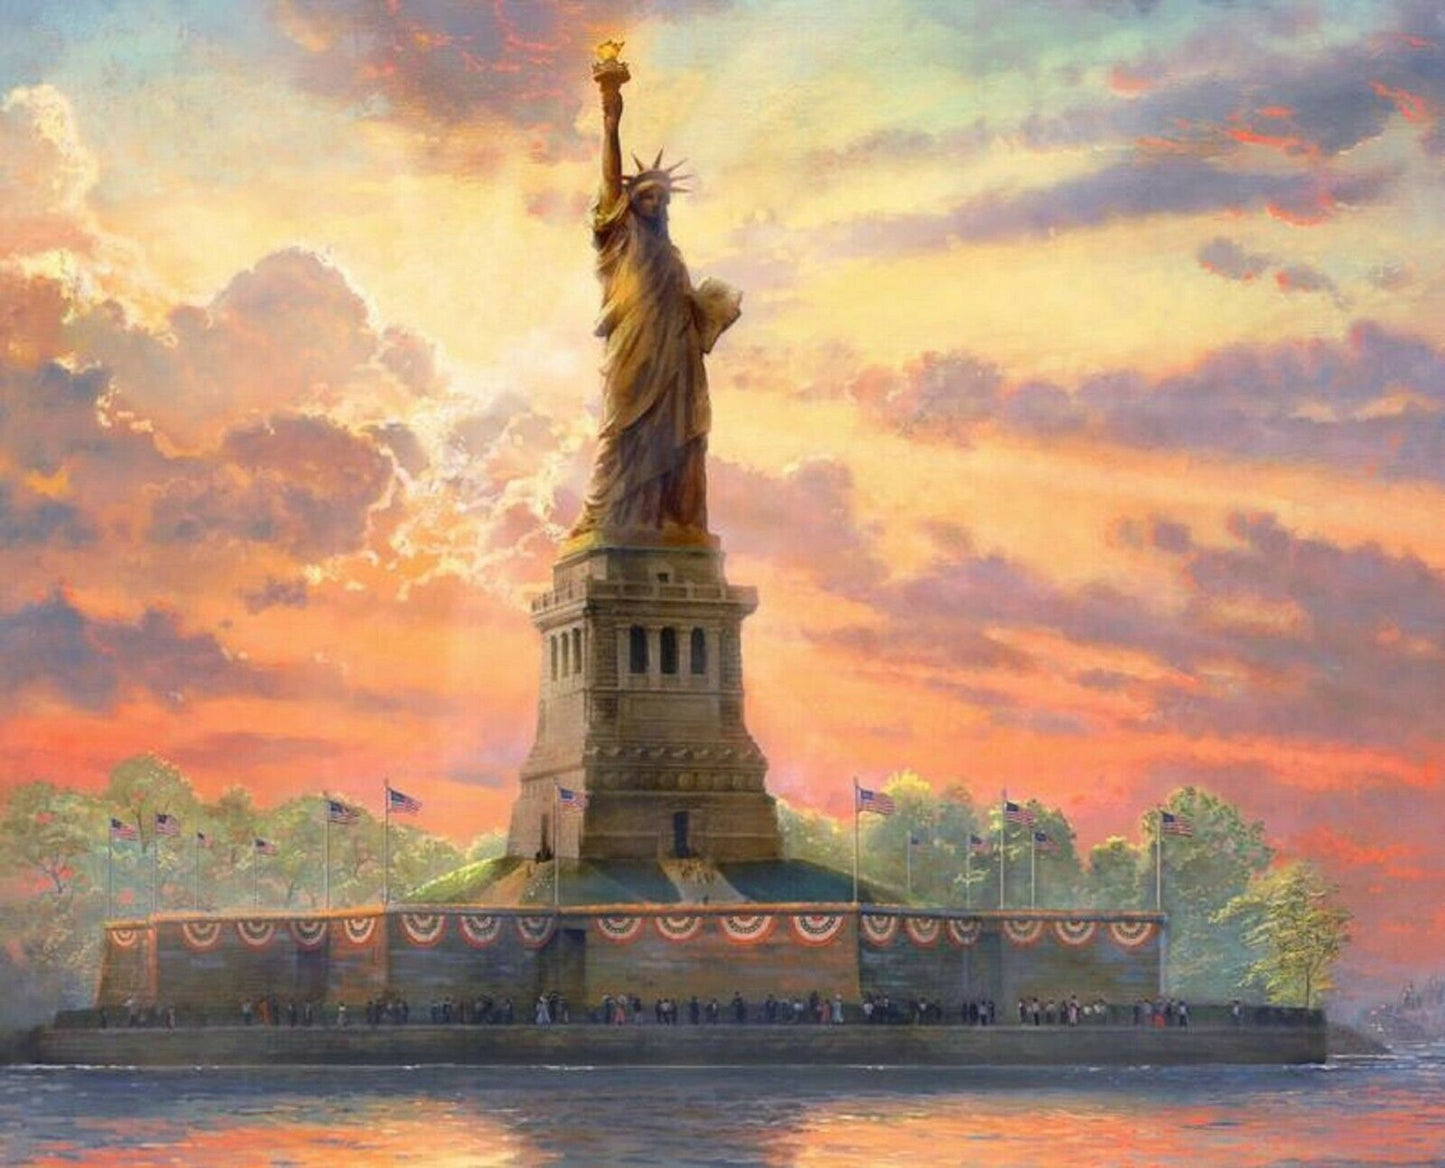 Thomas Kinkade "Statue of Liberty" Digital Panel by David Textiles